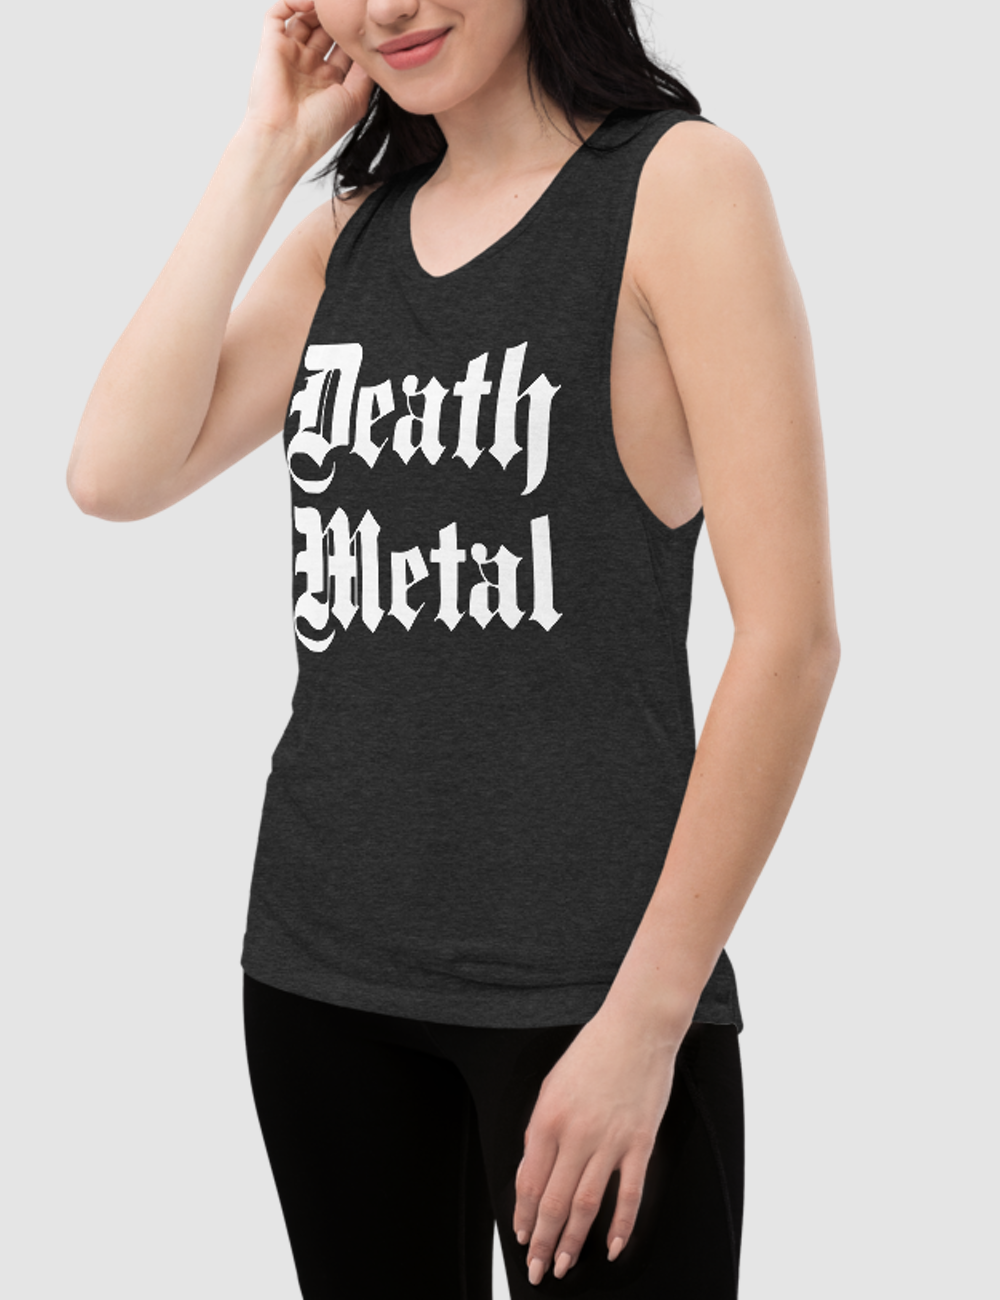 Death Metal | Women's Muscle Tank Top OniTakai